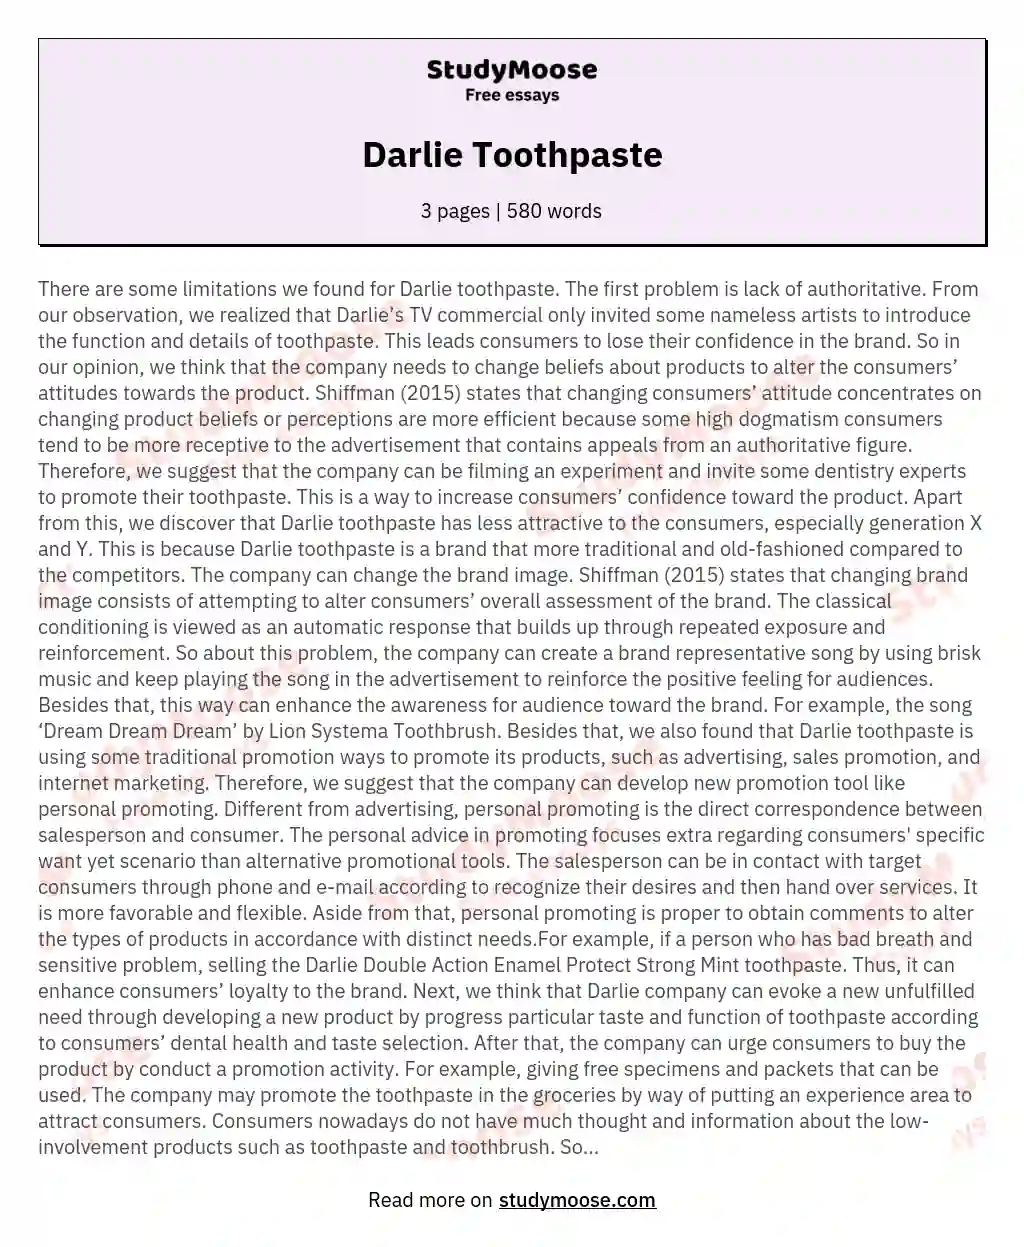 Darlie Toothpaste essay